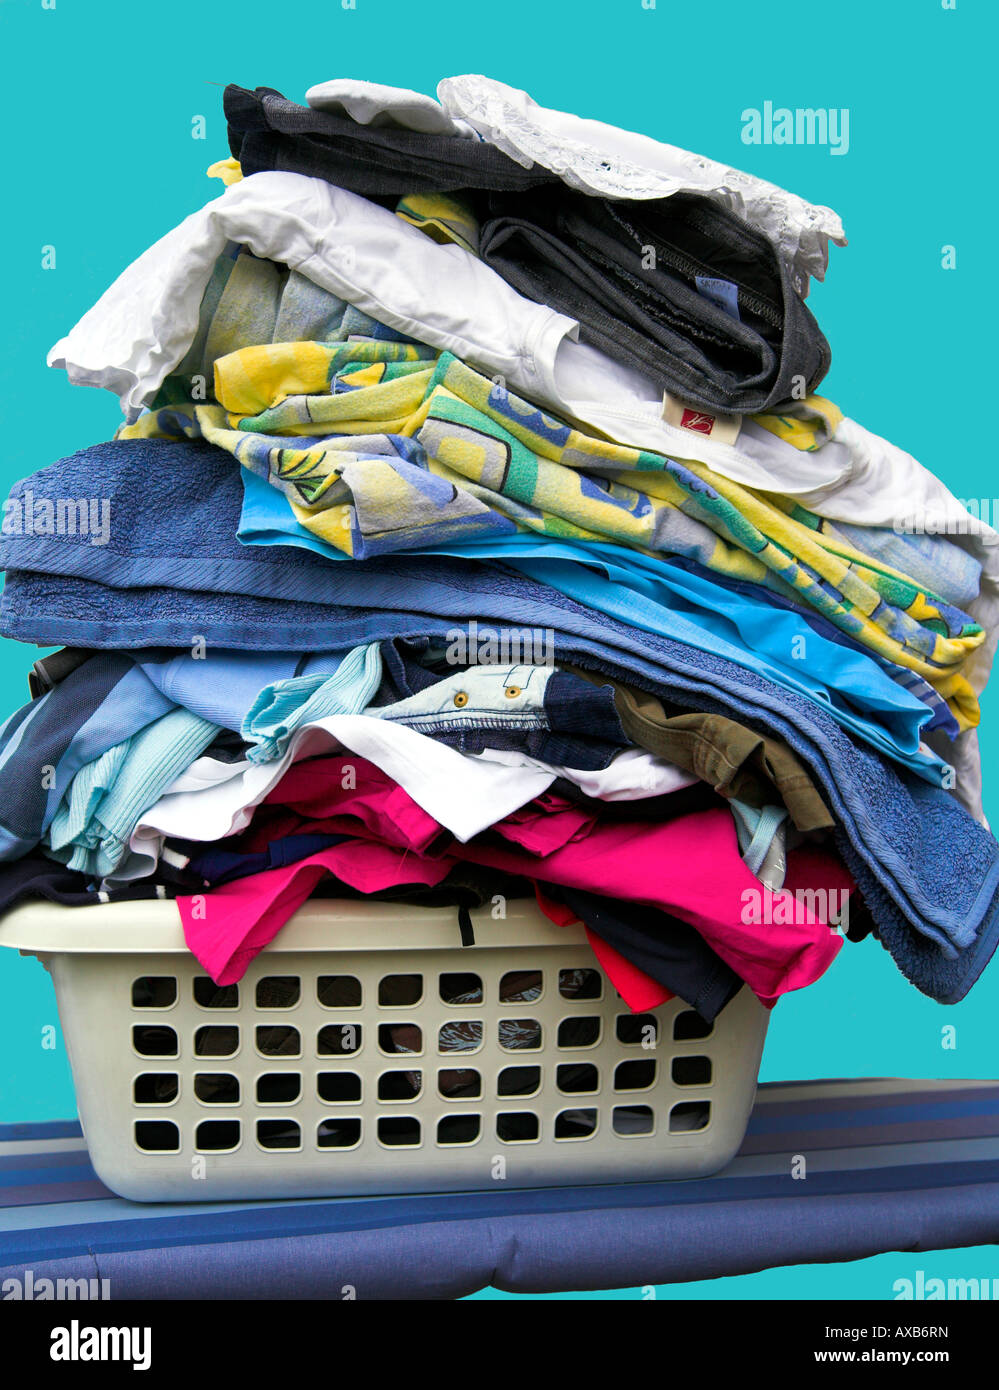 Washing basket full of clothing, with a blue background. Stock Photo